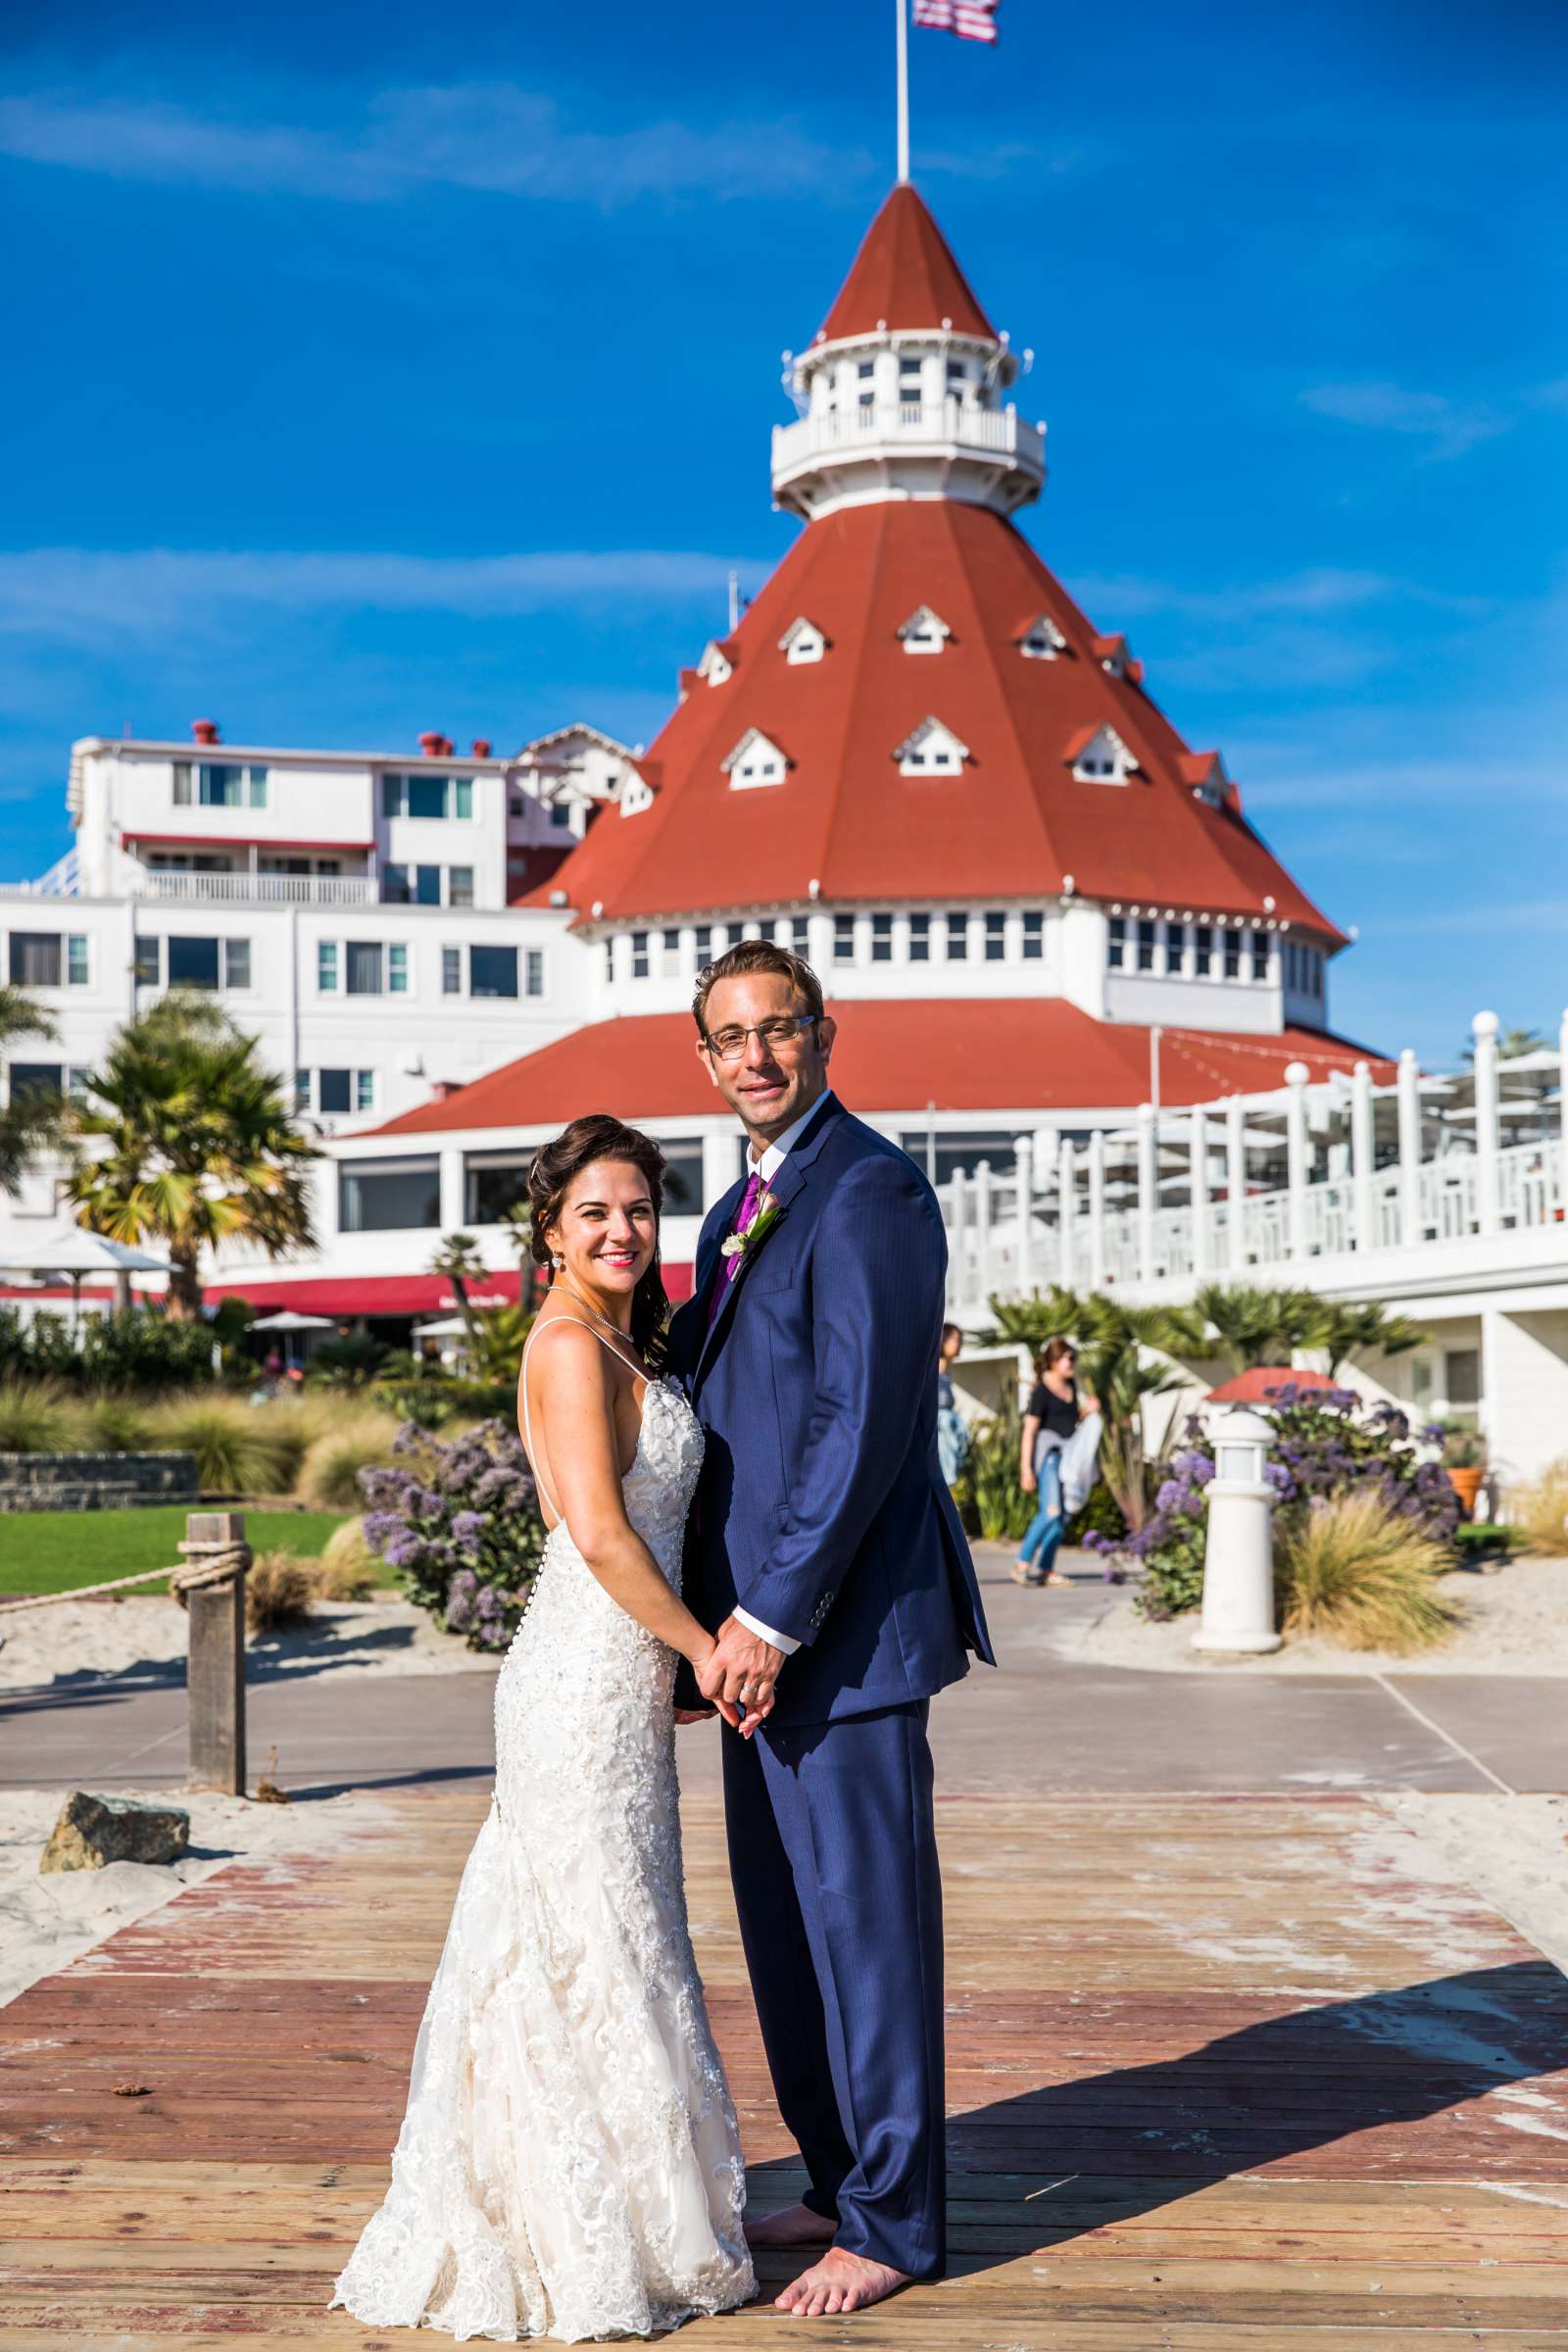 Hotel Del Coronado Wedding, Jessica and Todd Wedding Photo #6 by True Photography